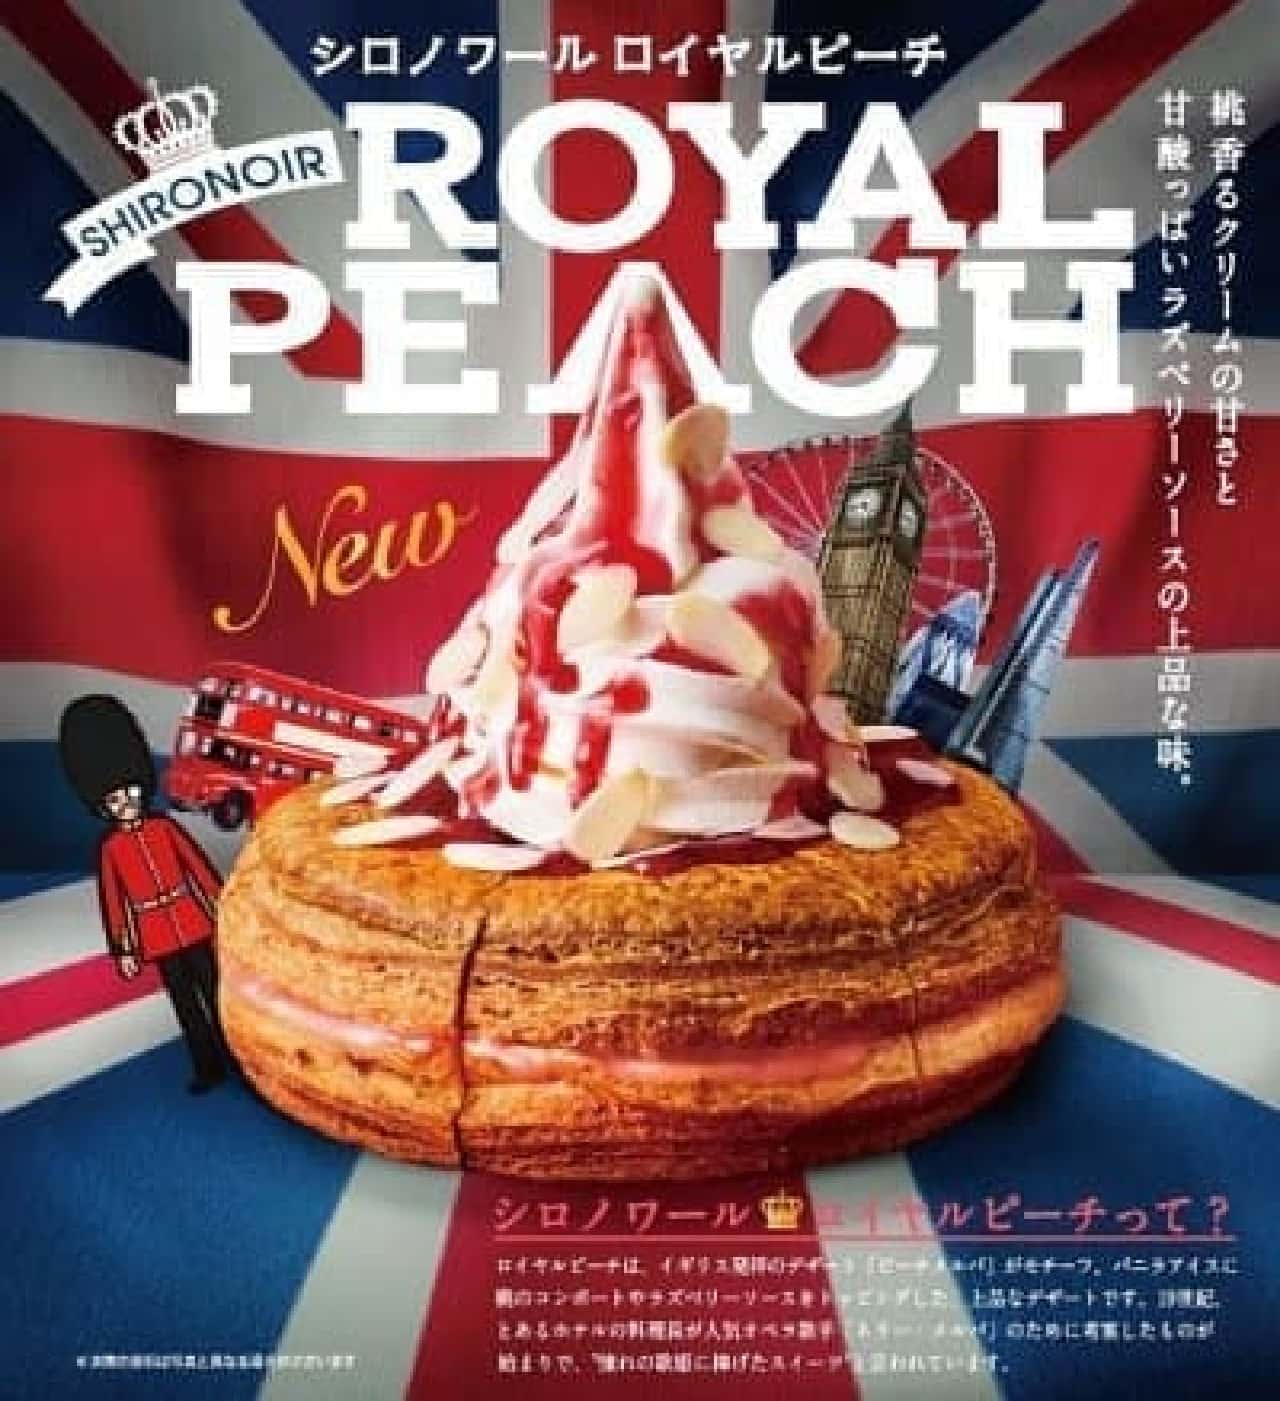 Komeda Coffee Shop "Shiro Noir Royal Peach"